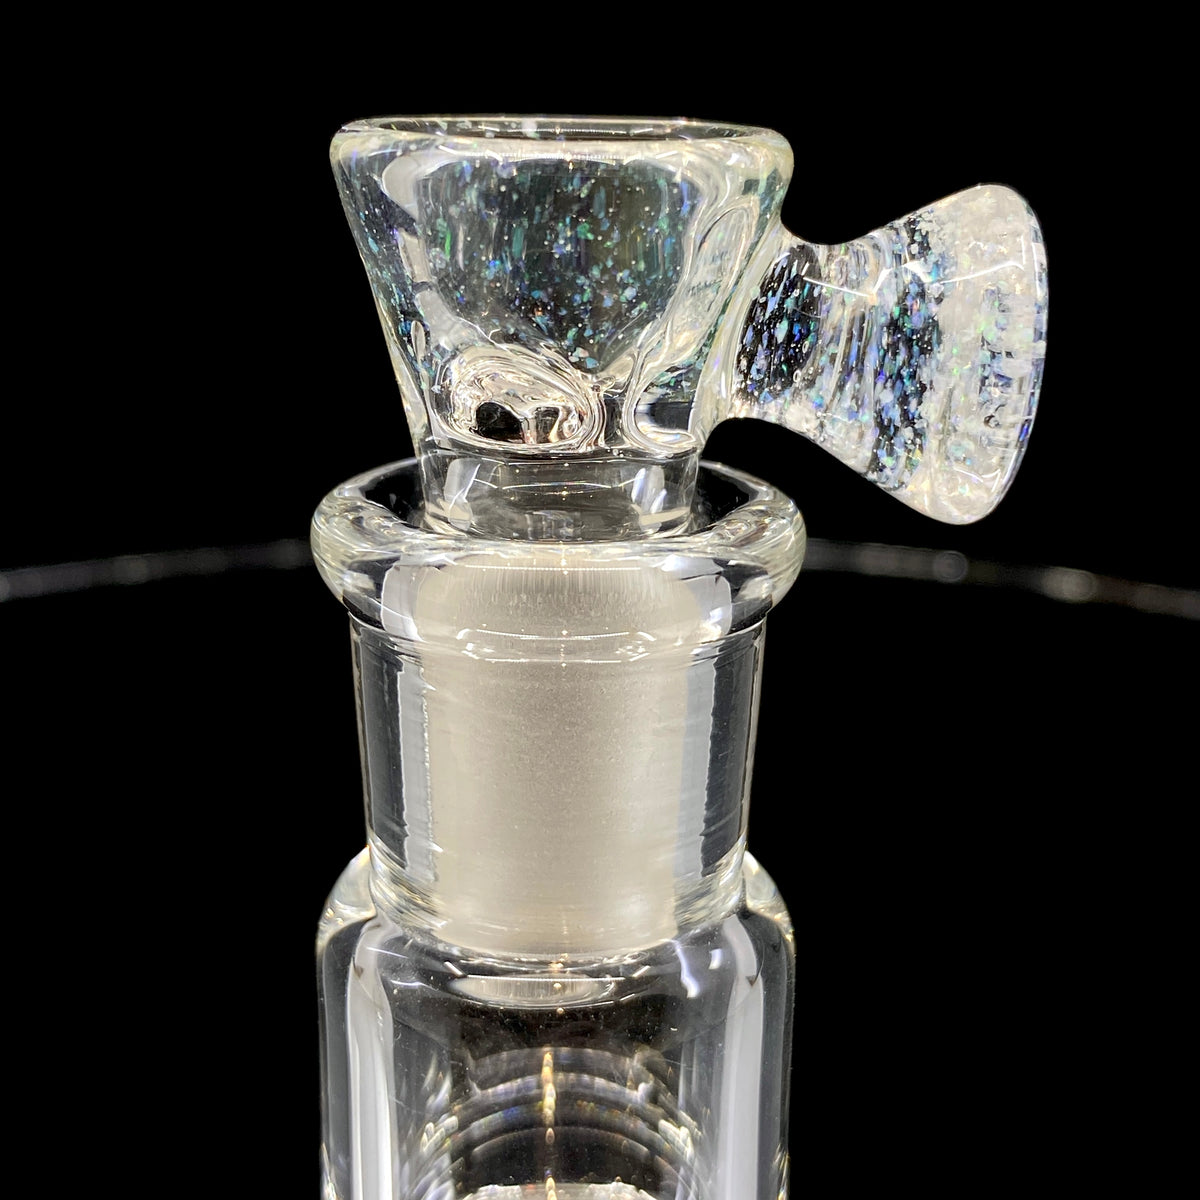 DC Glass Arts Cone Handle 14mm 4-Hole Crushed Opal Slide